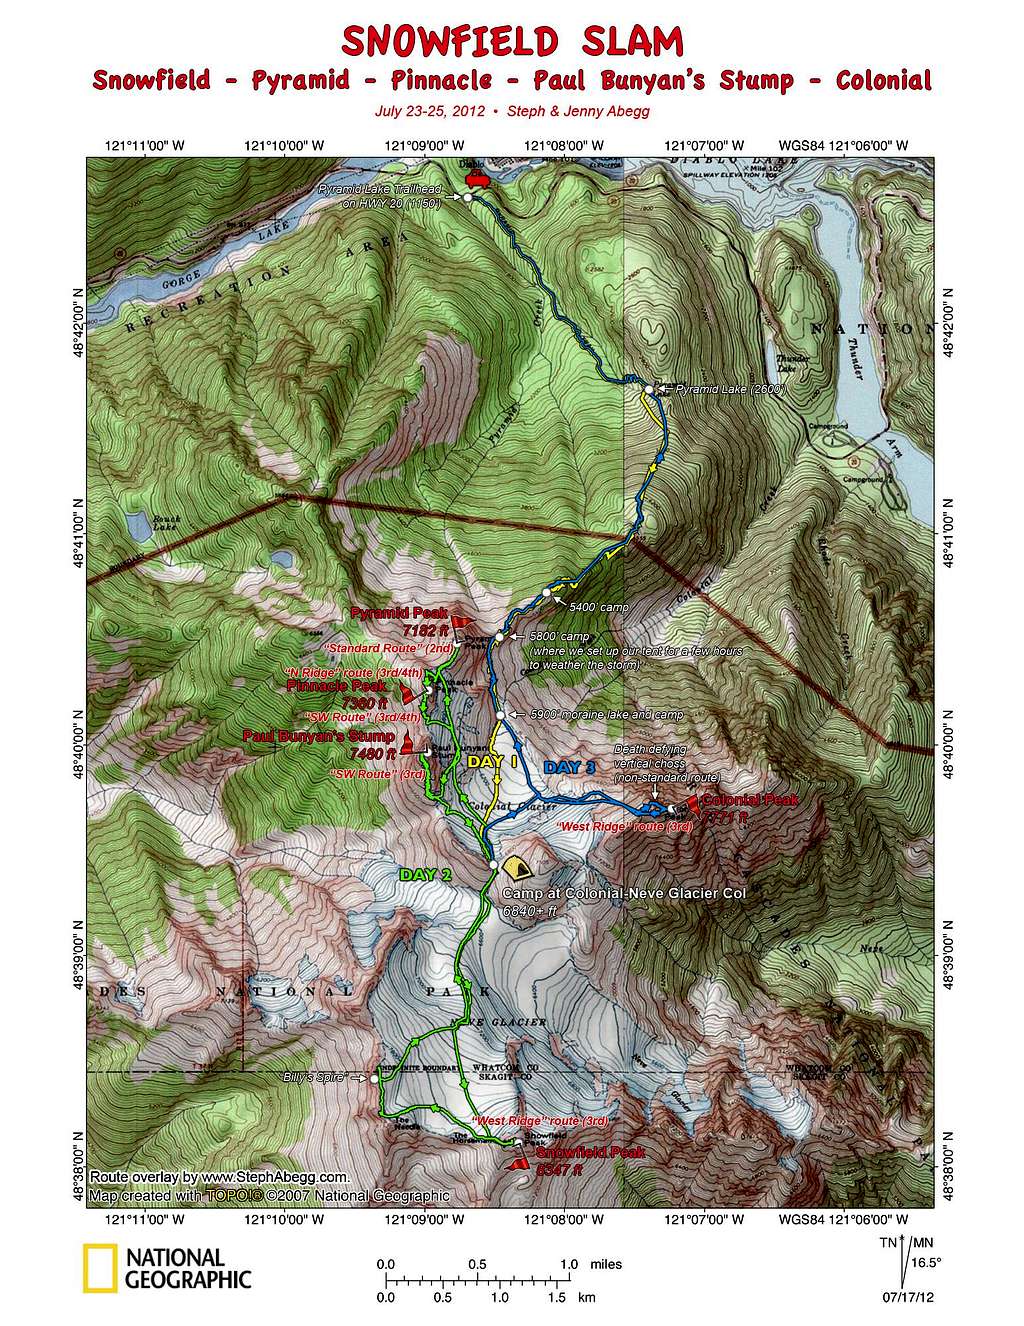 Map of Snowfield Slam: Snowfield, Pyramid, Pinnacle, Paul Bunyan's Stump, Colonial